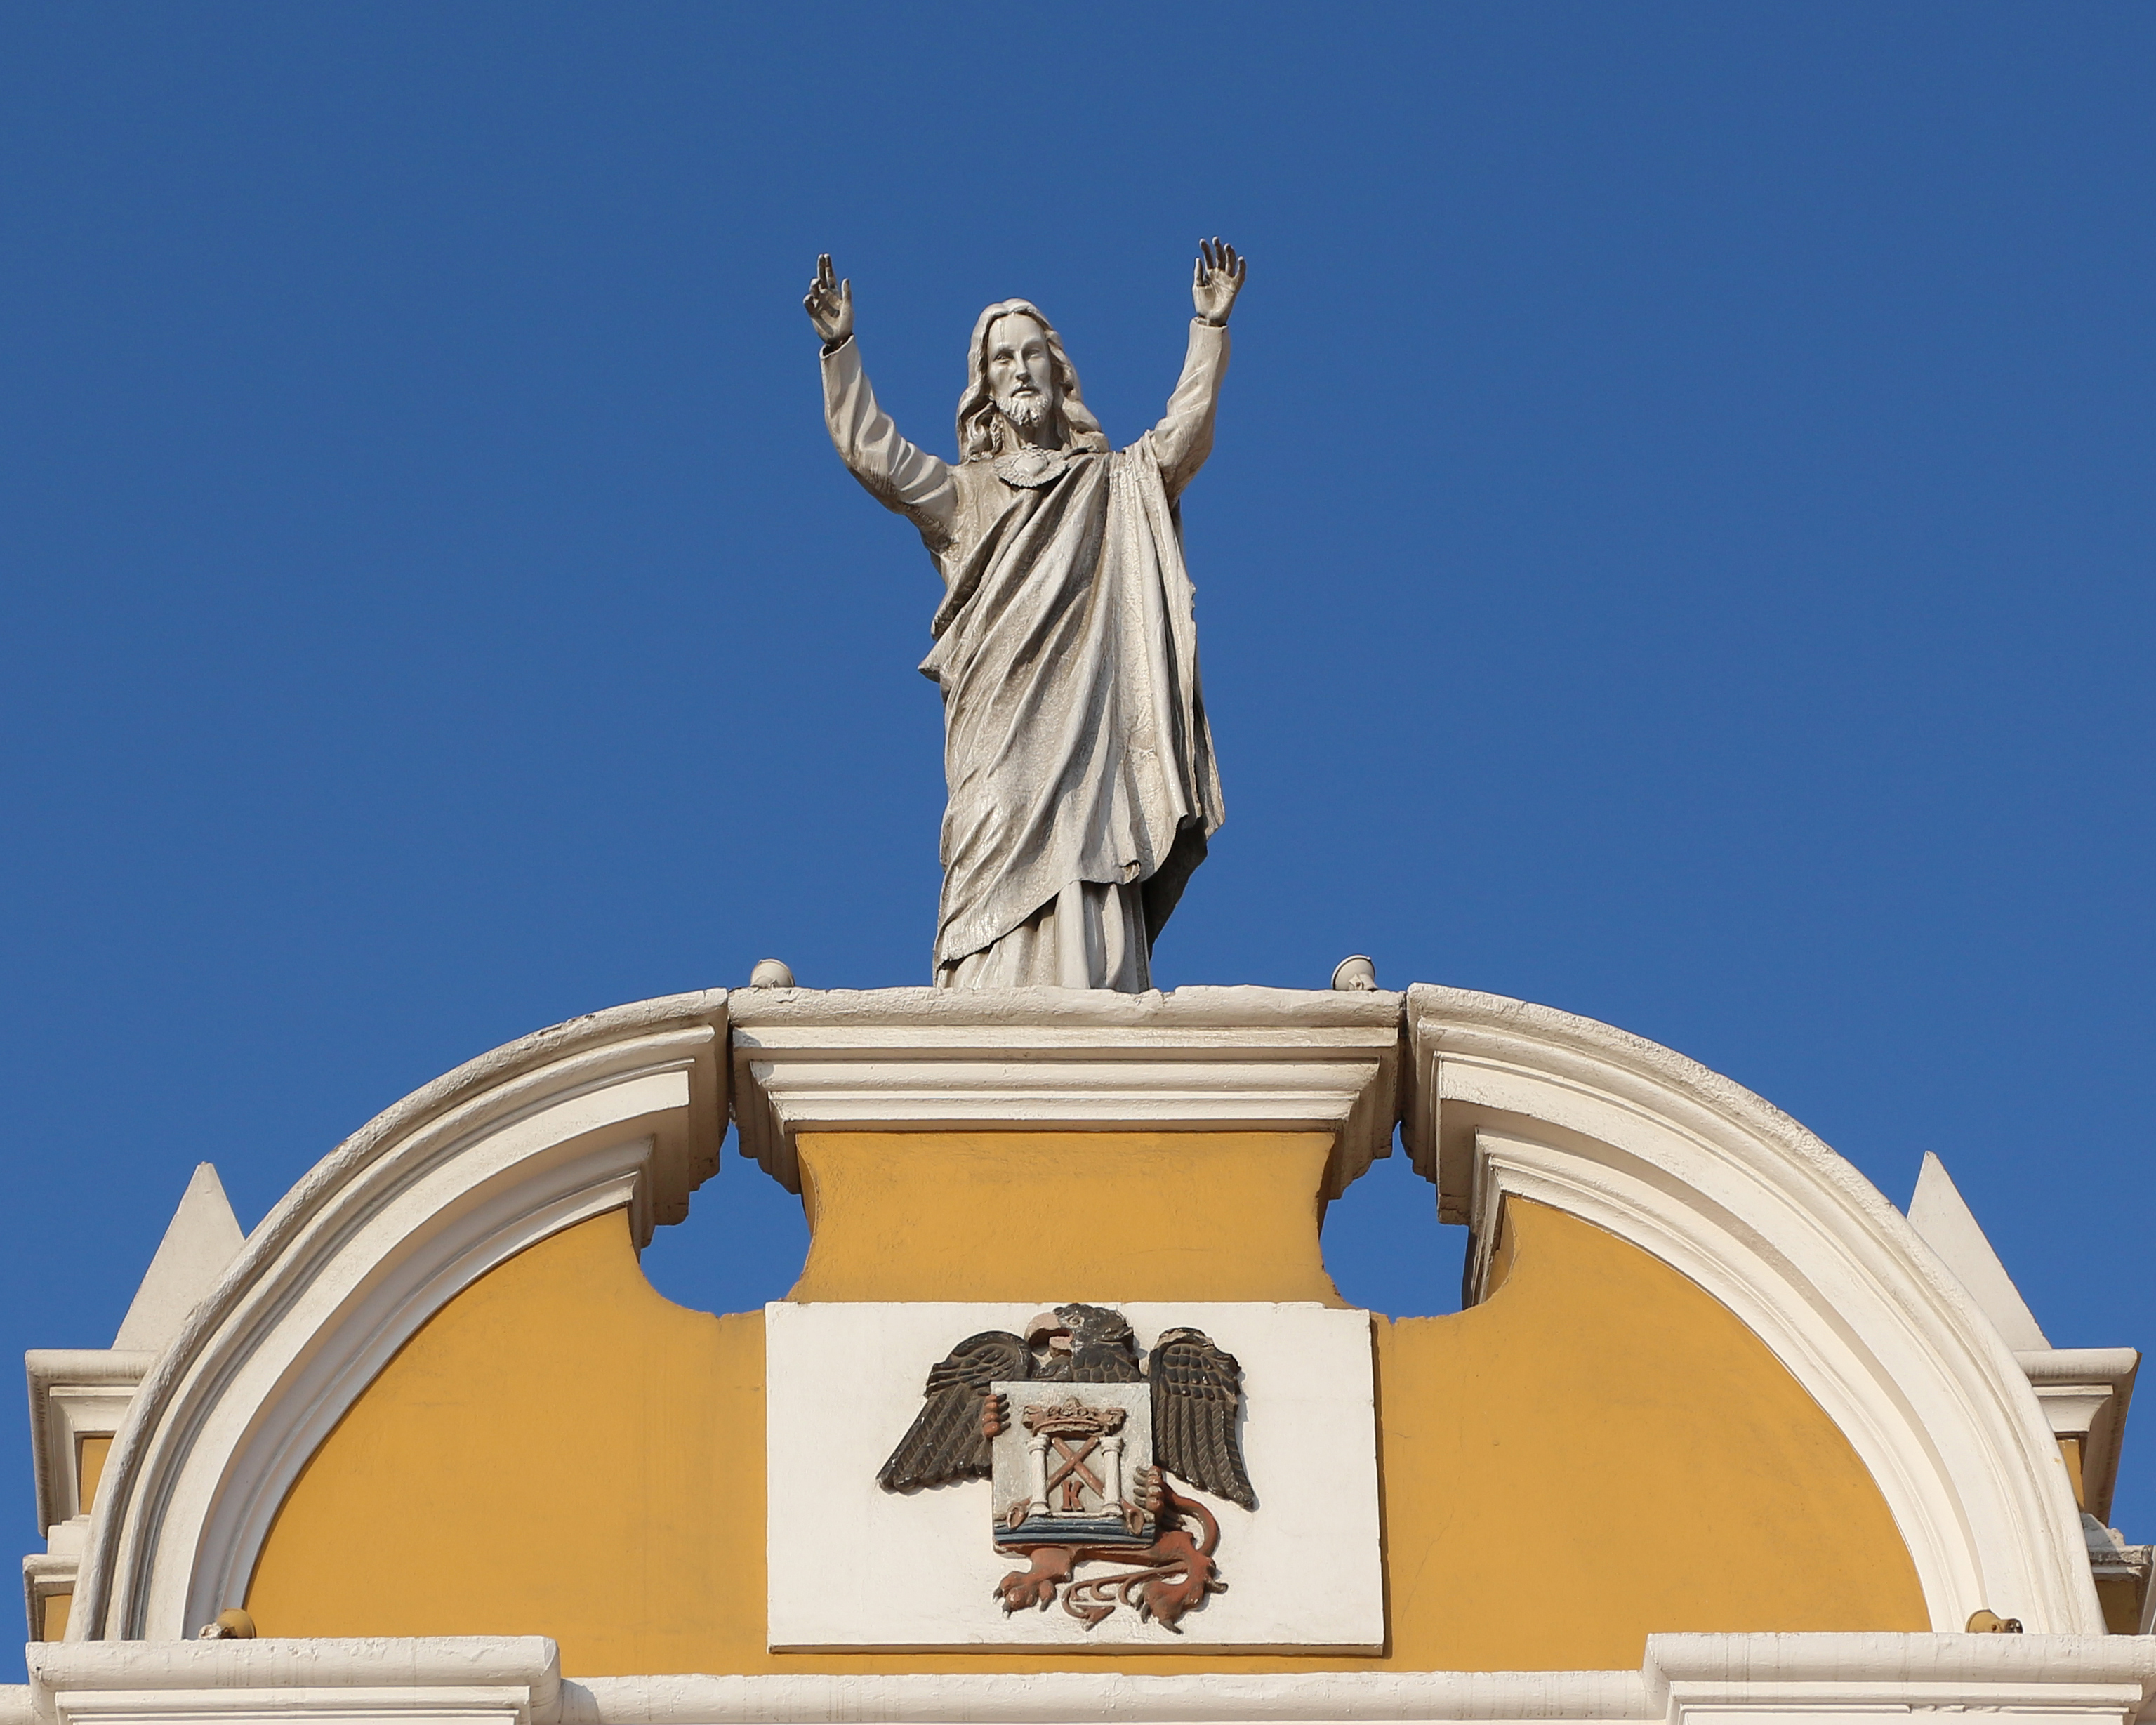 Cathedral of Trujillo, Peru - Statue